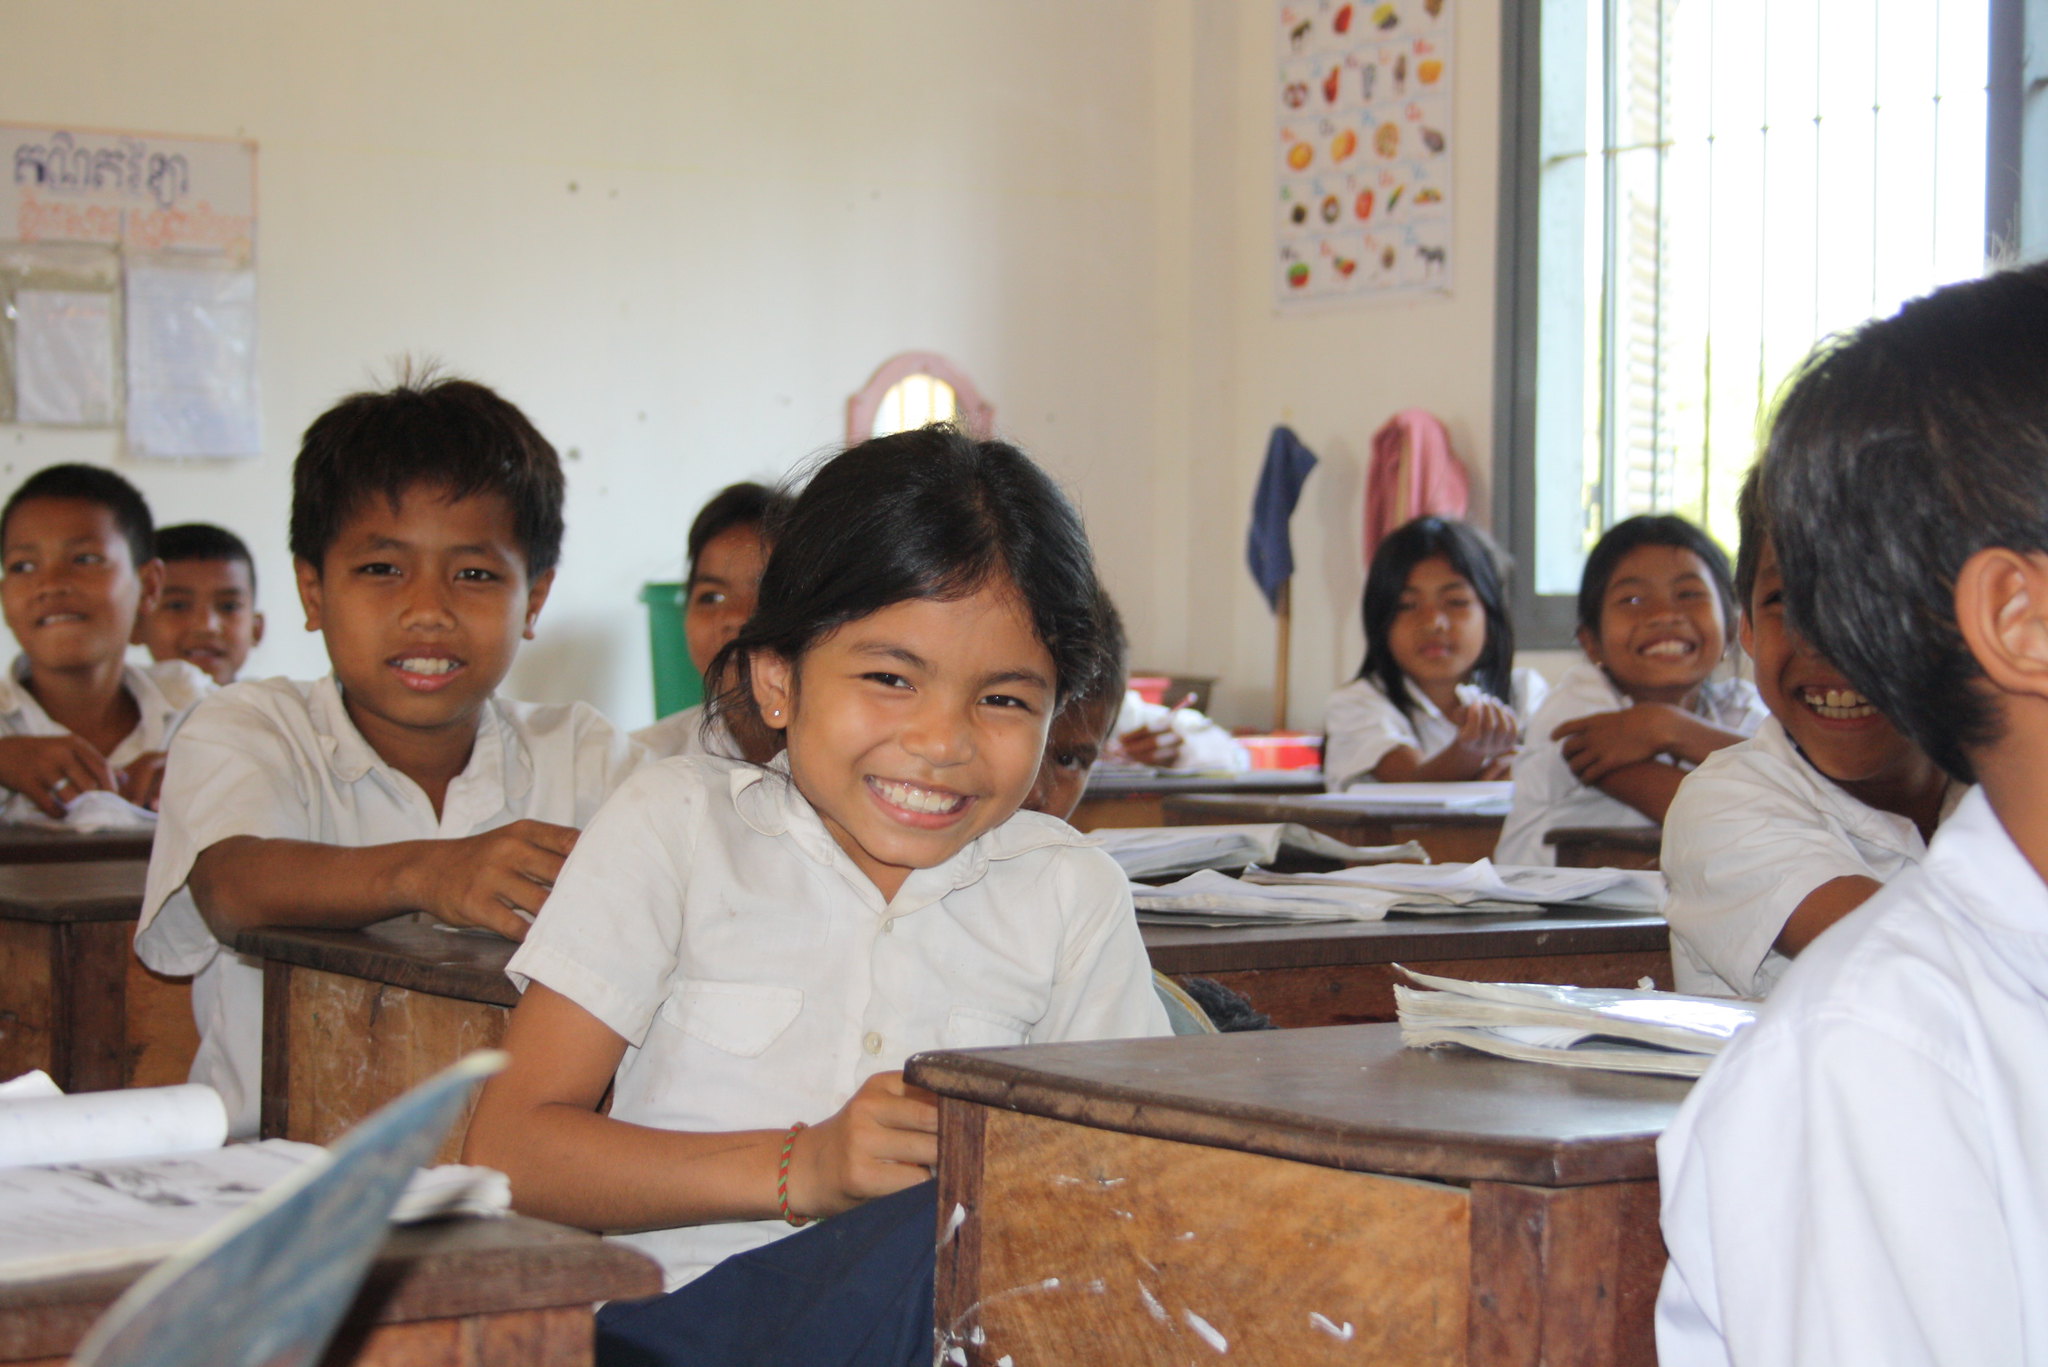 Primary school  Open Development Cambodia (ODC)